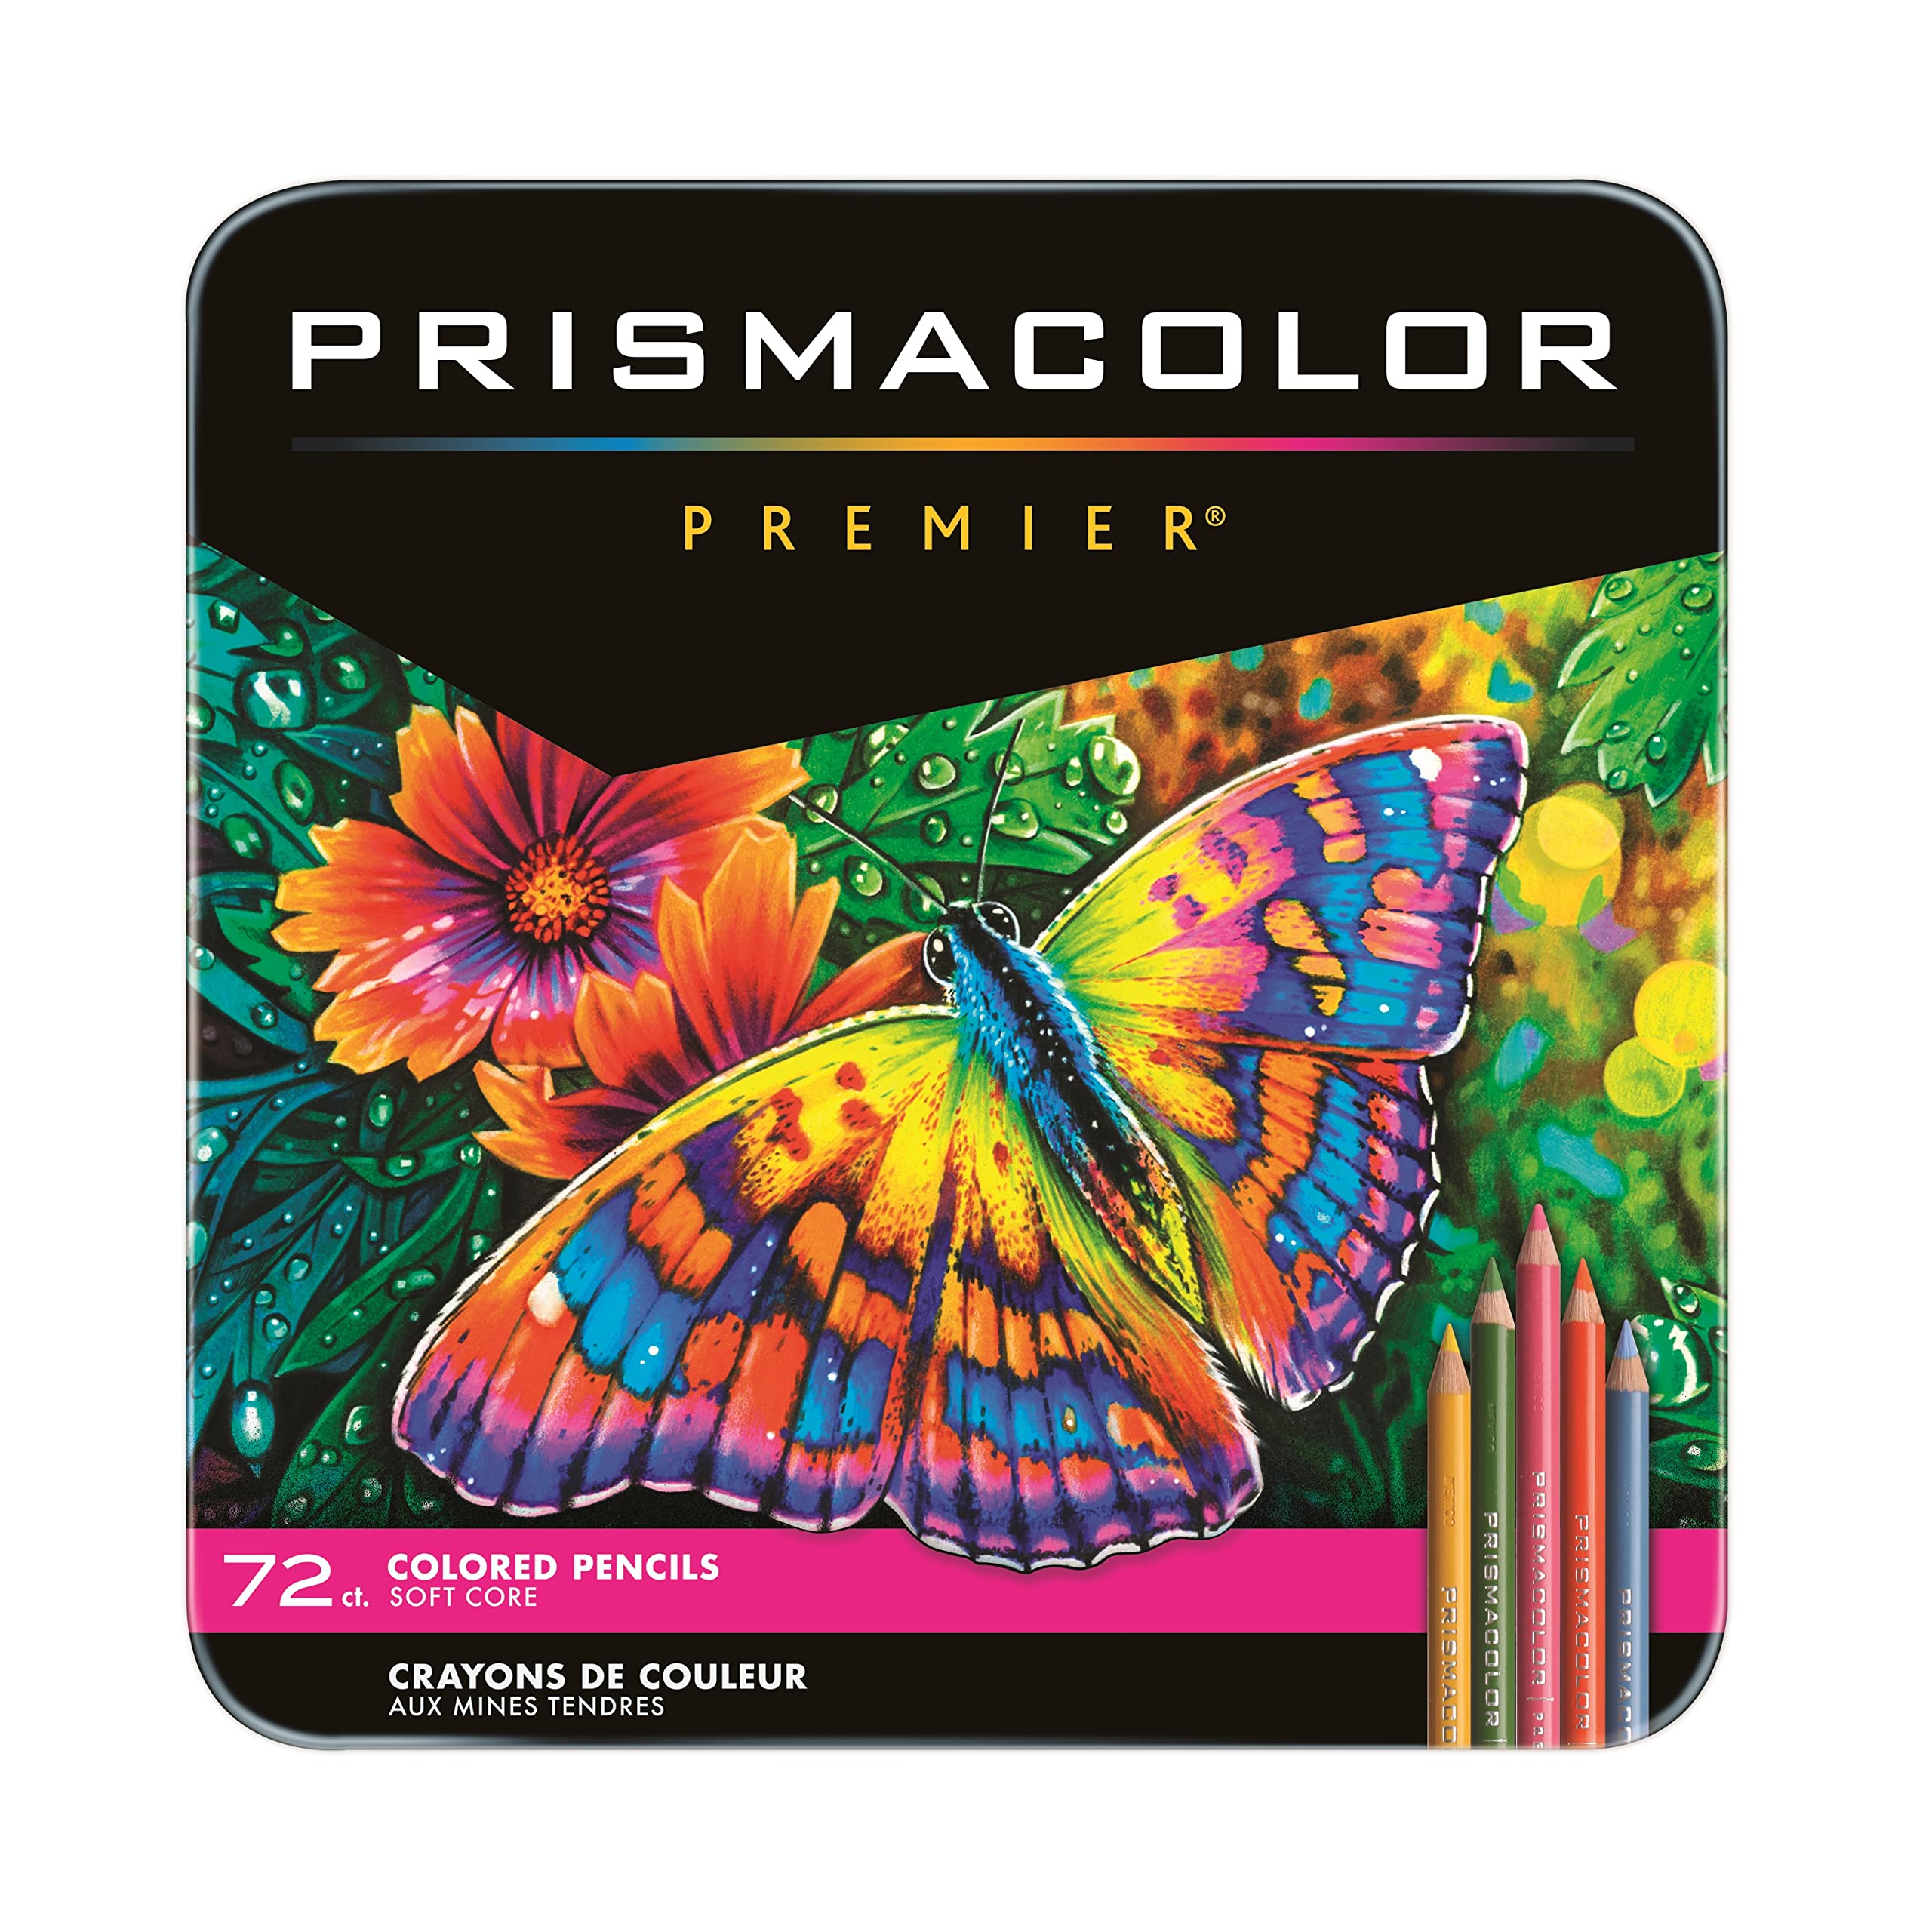 Prismacolor प्रीमियर रंगीन पेंसिलें